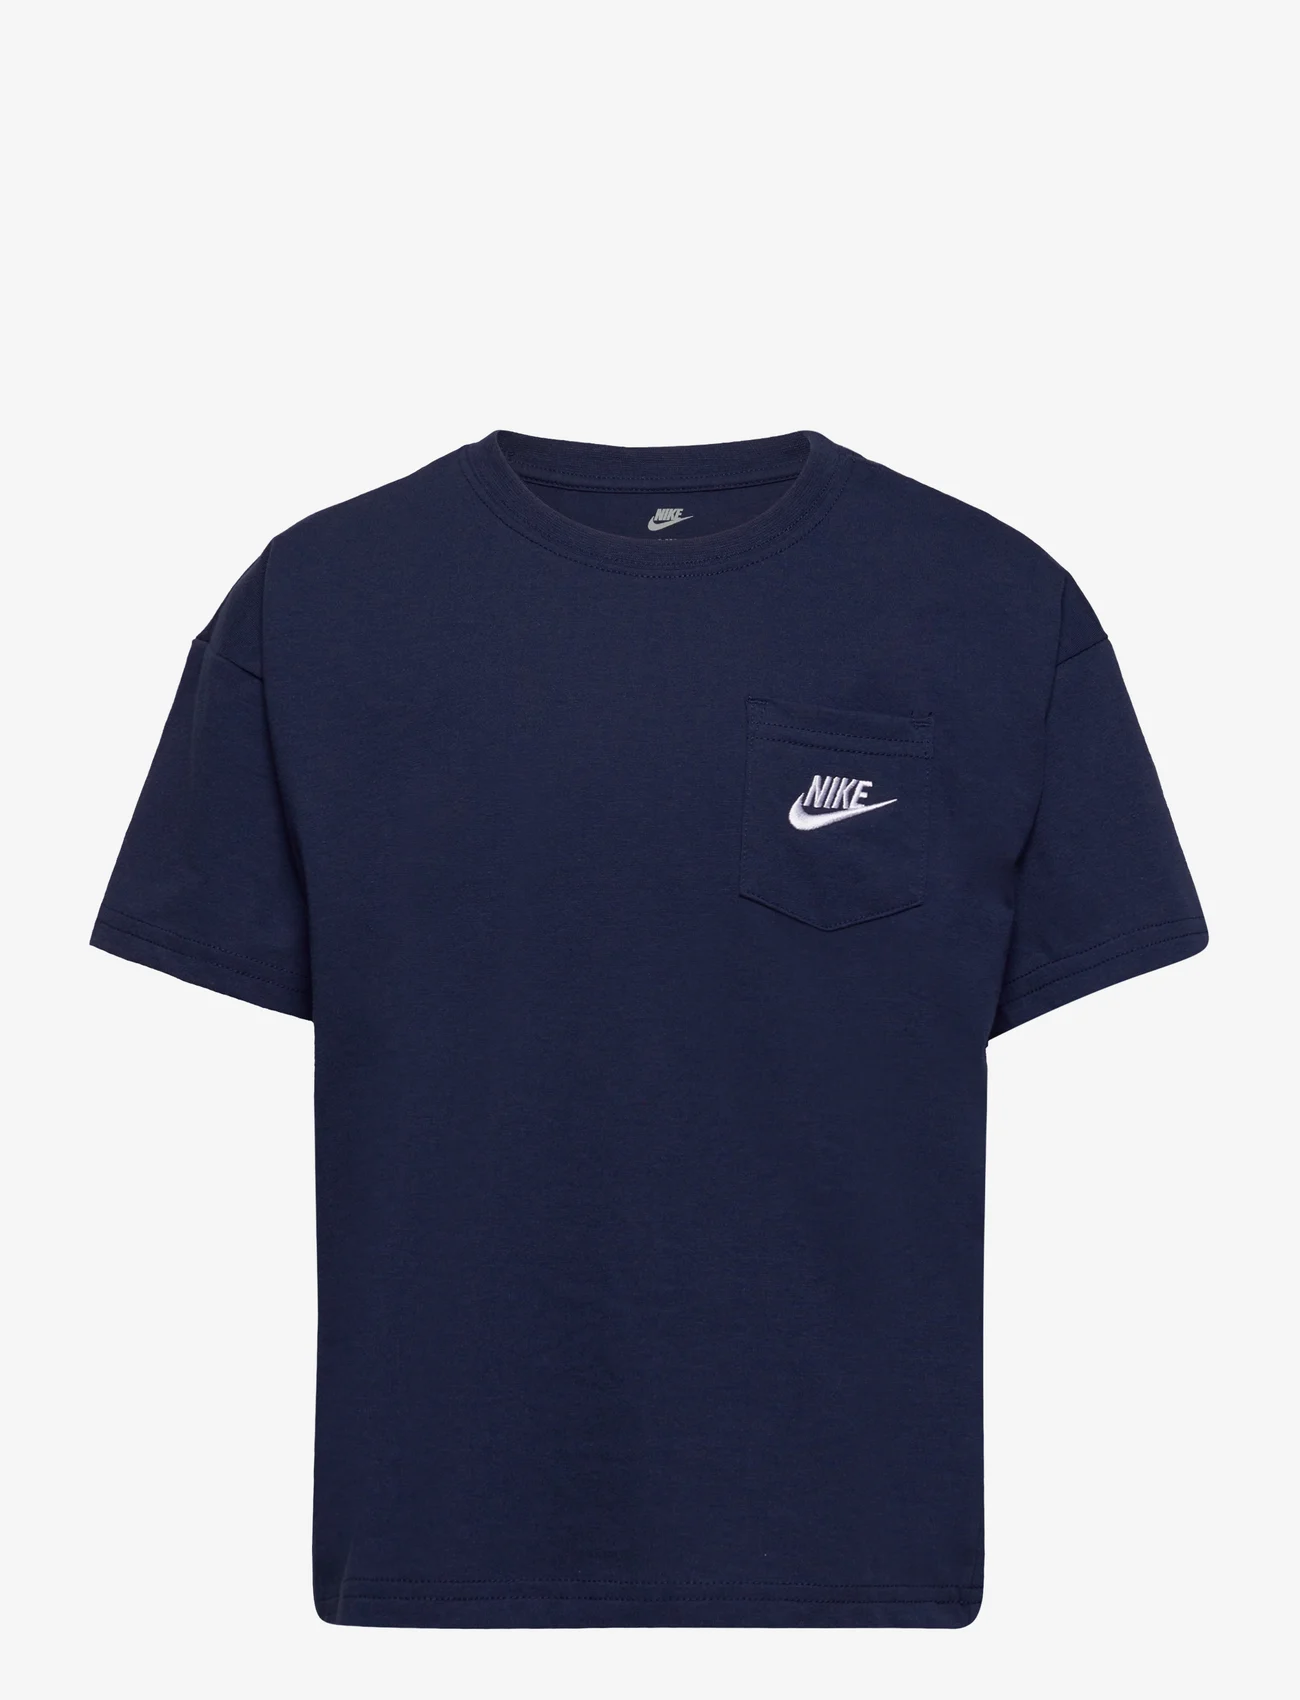 Nike - B NSW RELAXED POCKET TEE - lühikeste varrukatega t-särgid - midnight navy - 0